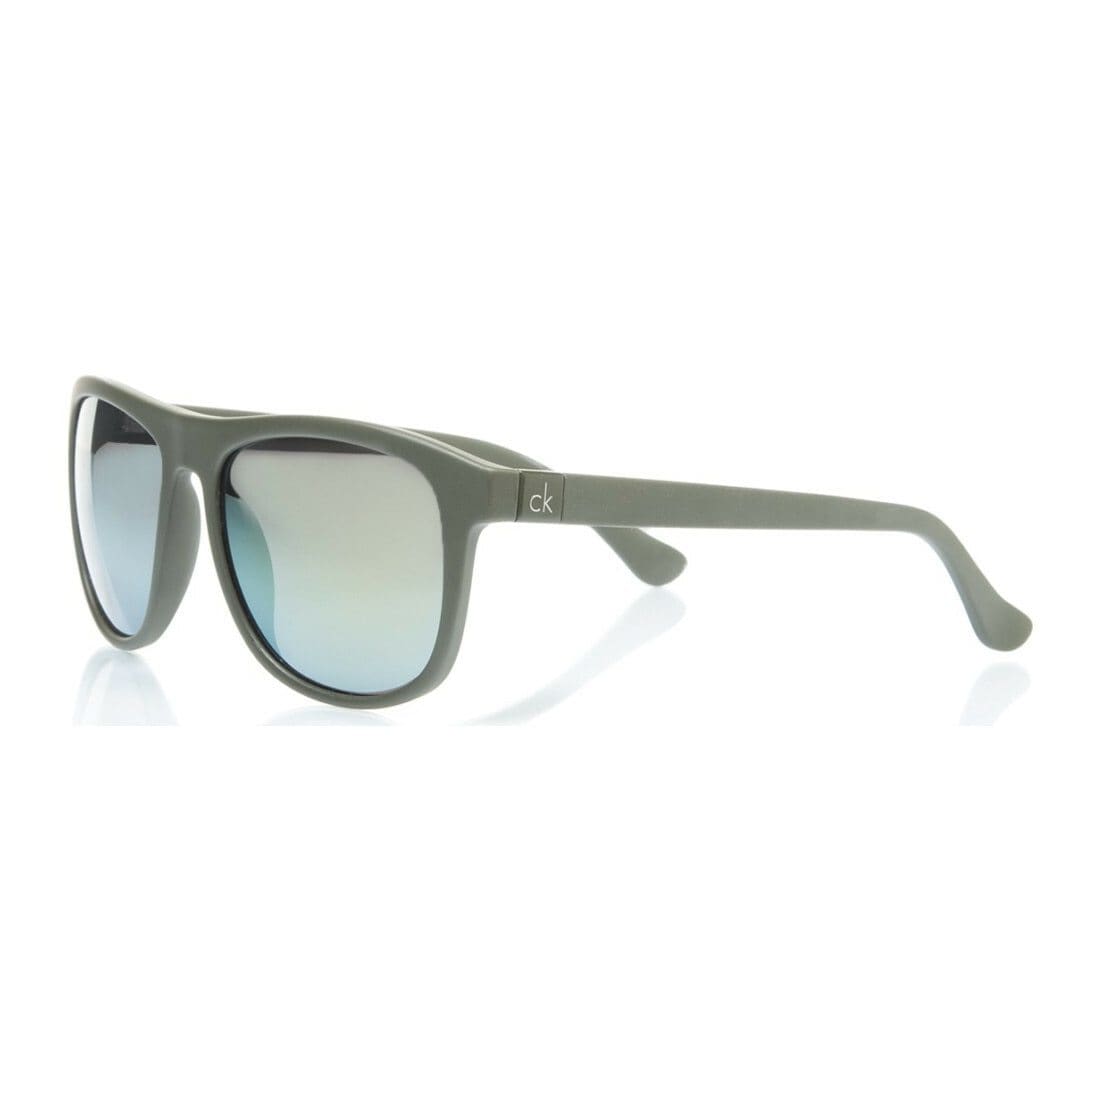 Calvin Klein CK3175S-317 All Grey Men's Square Sunglasses Frames 750779086513